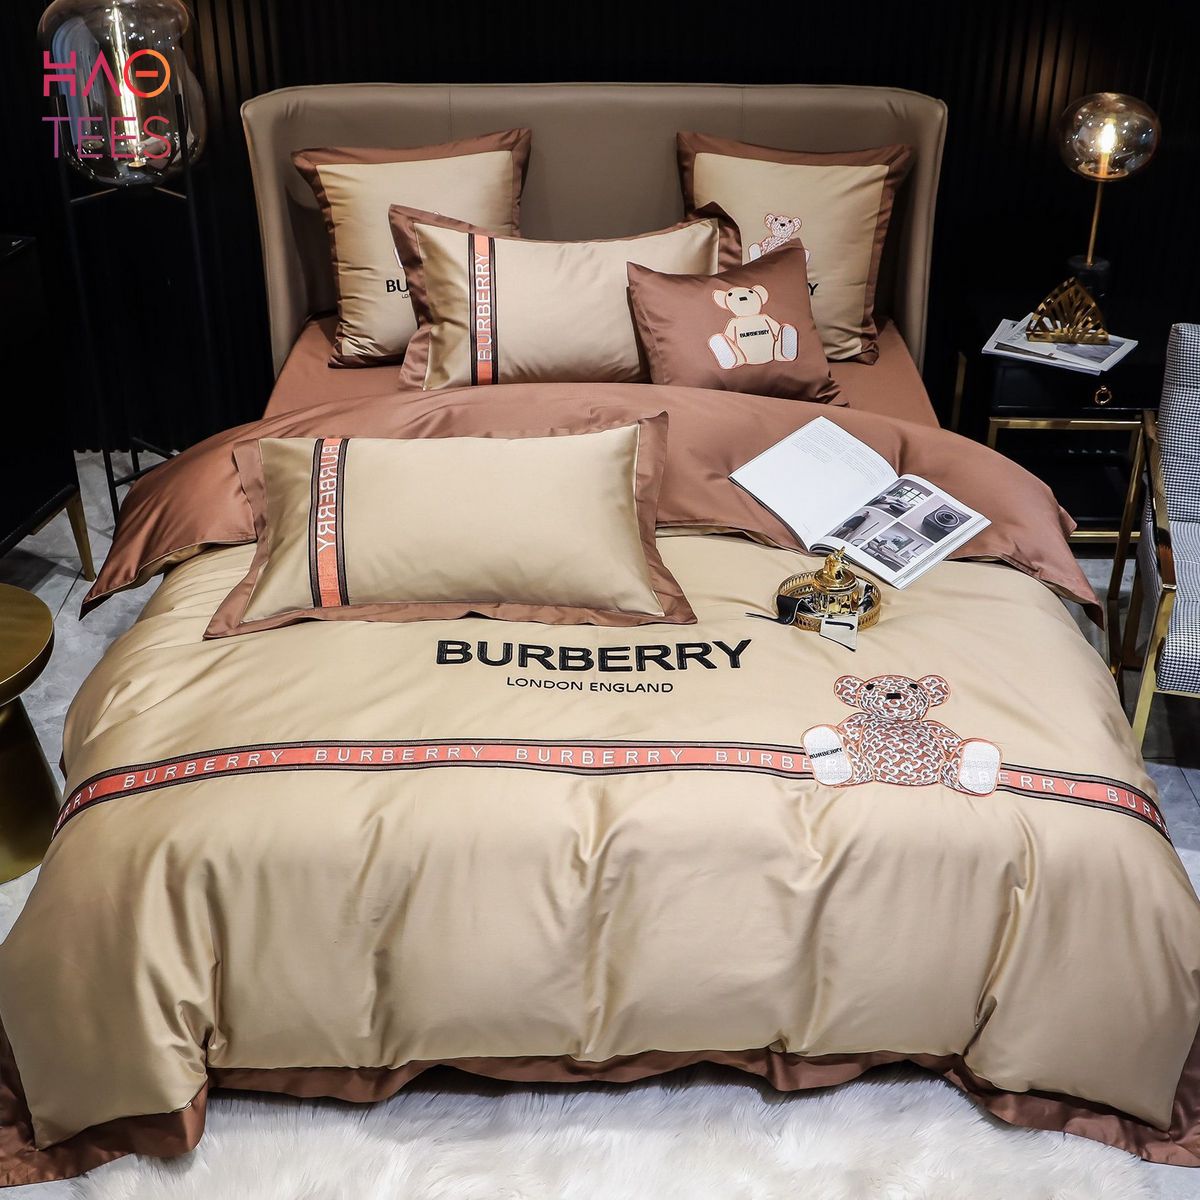 Burberry London England Luxury Trending Bedding Set